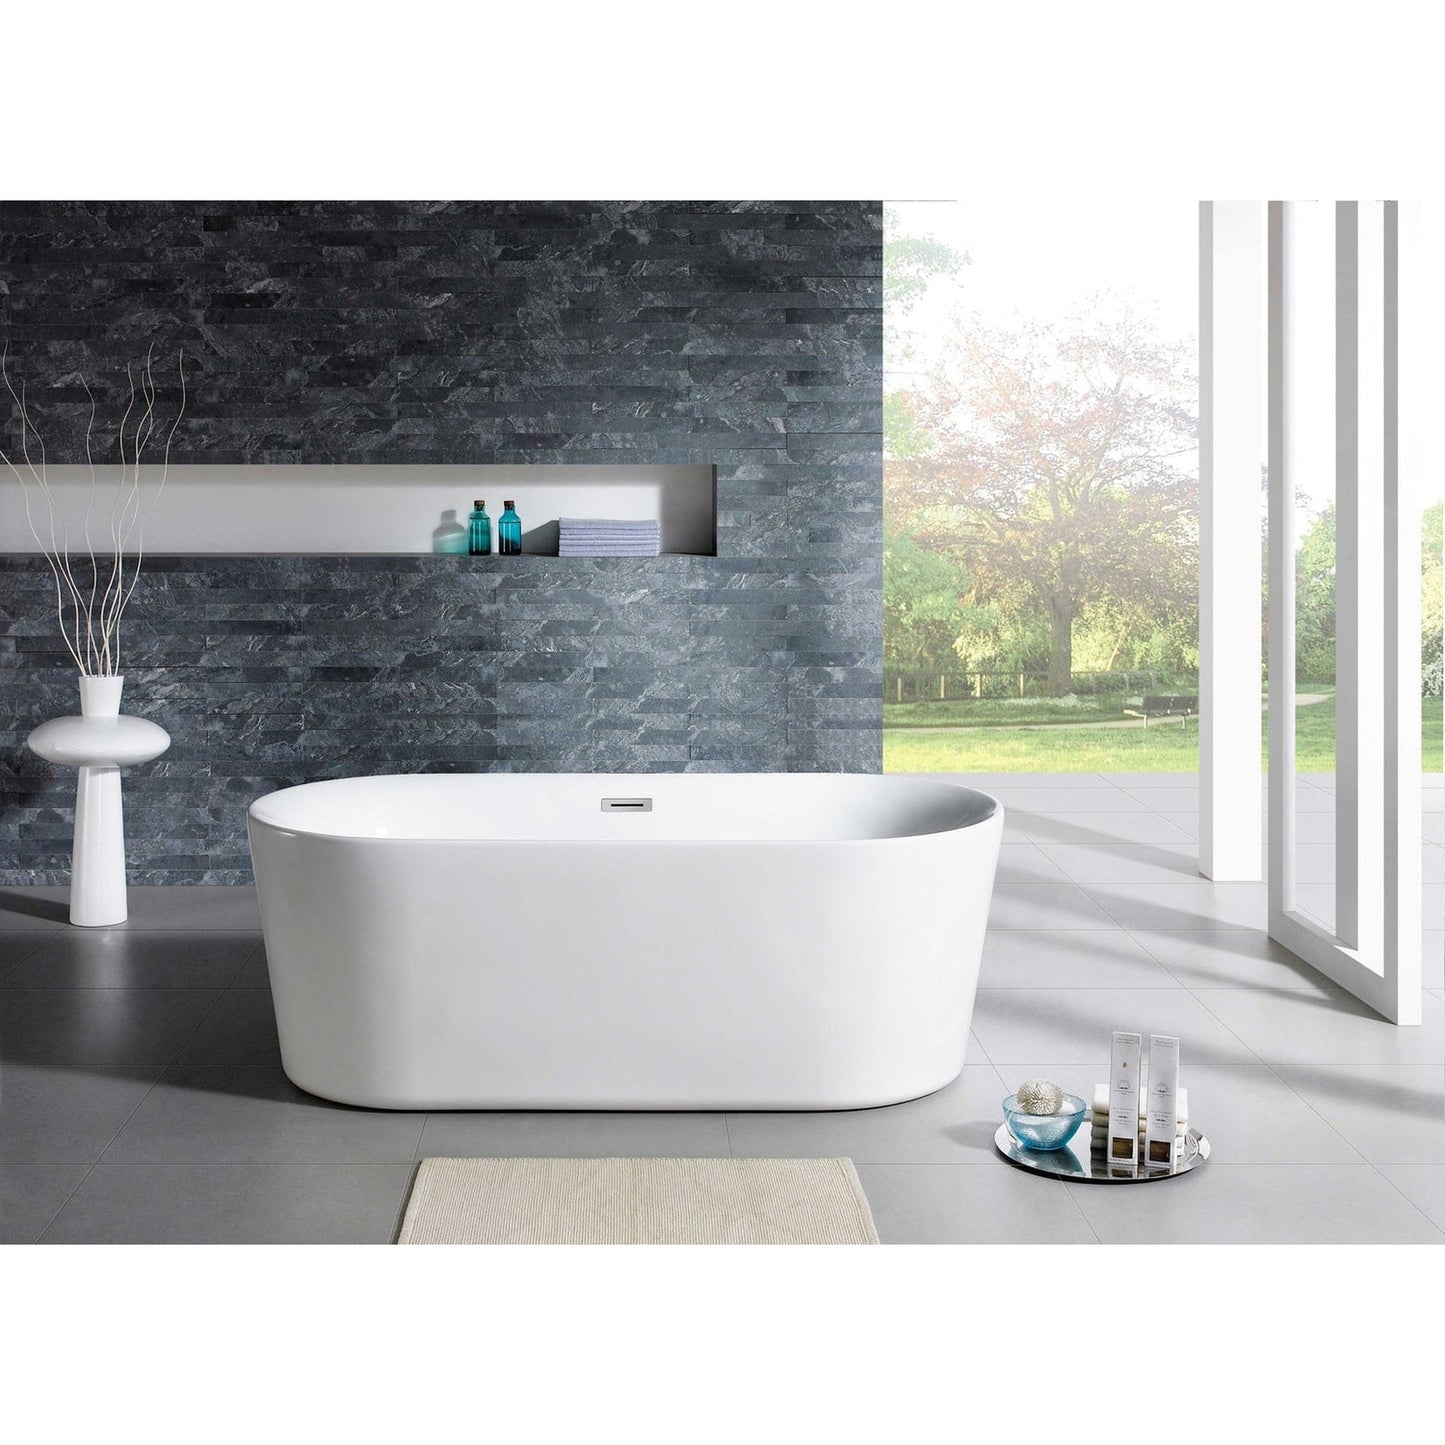 Eviva Tiffany 60" x 32" White Freestanding Rectangular Acrylic Soaking Bathtub